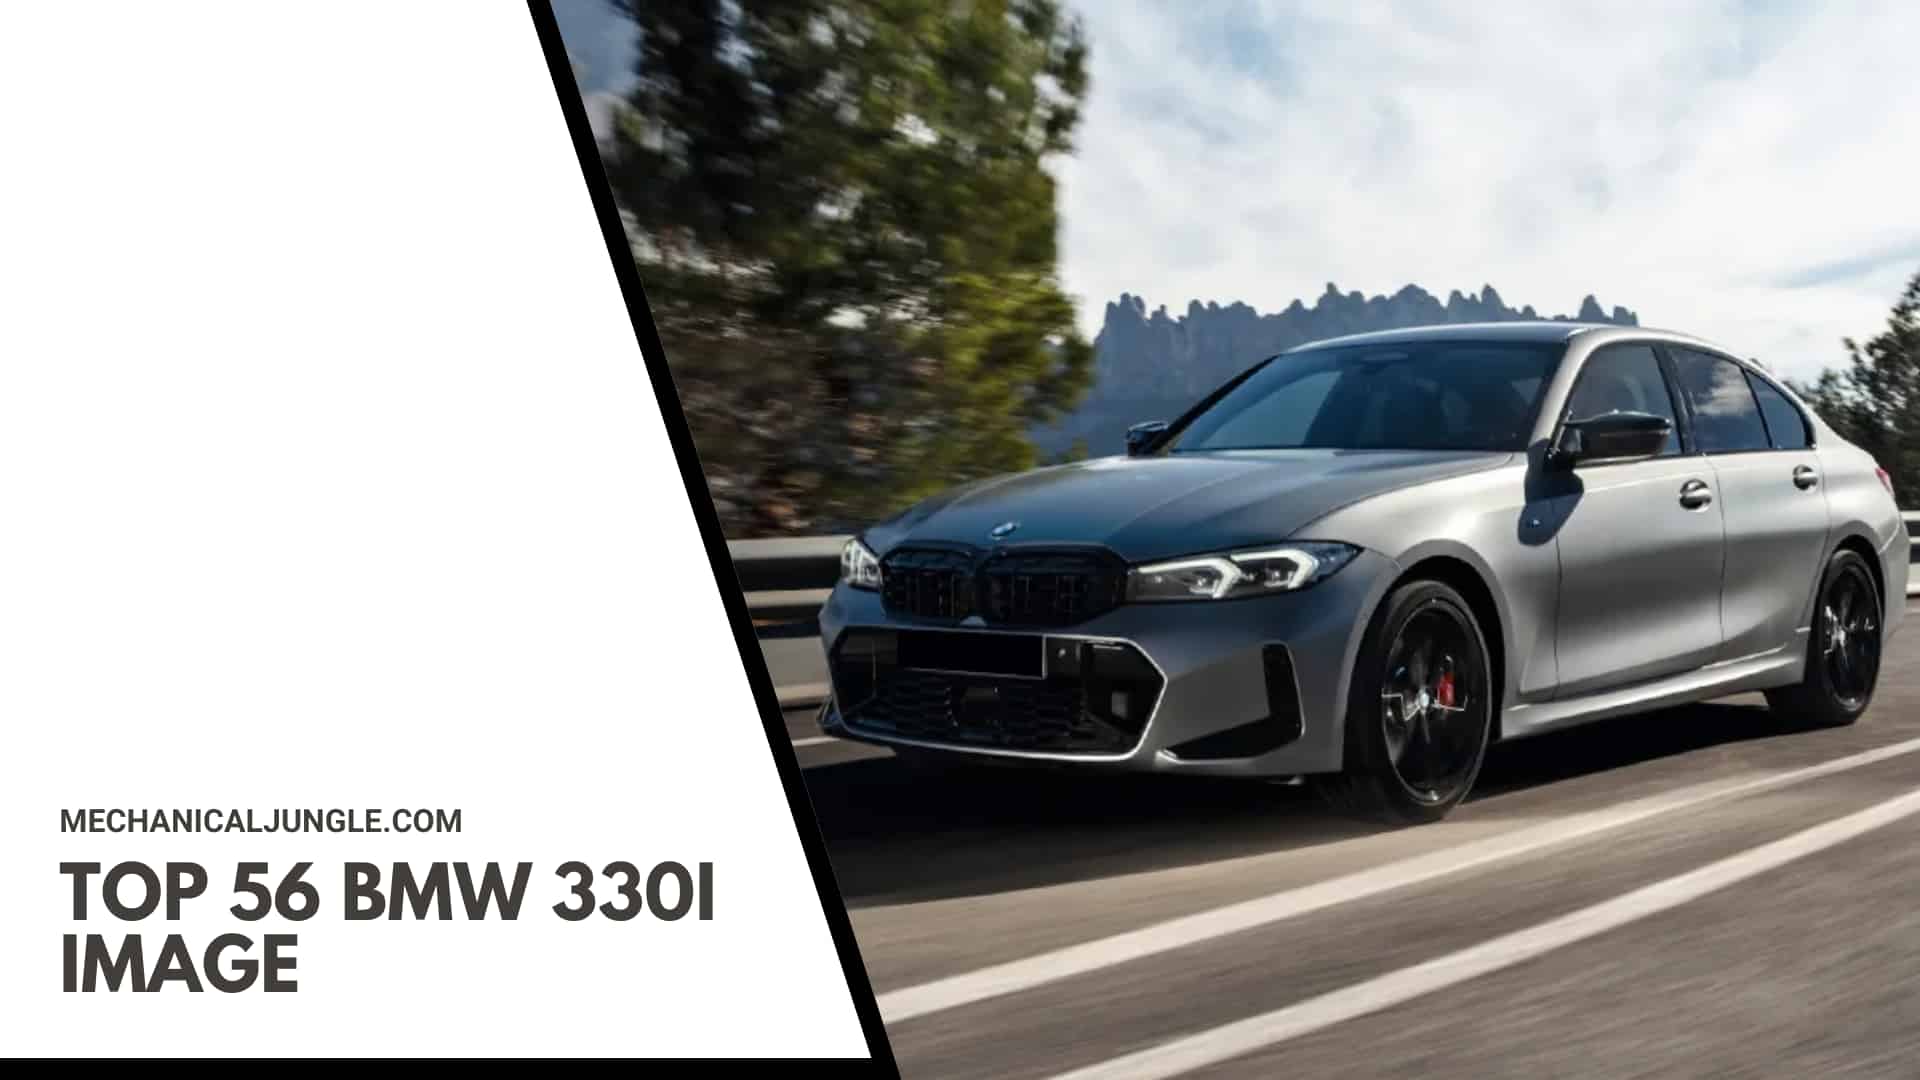 Top 56 BMW 330i Image